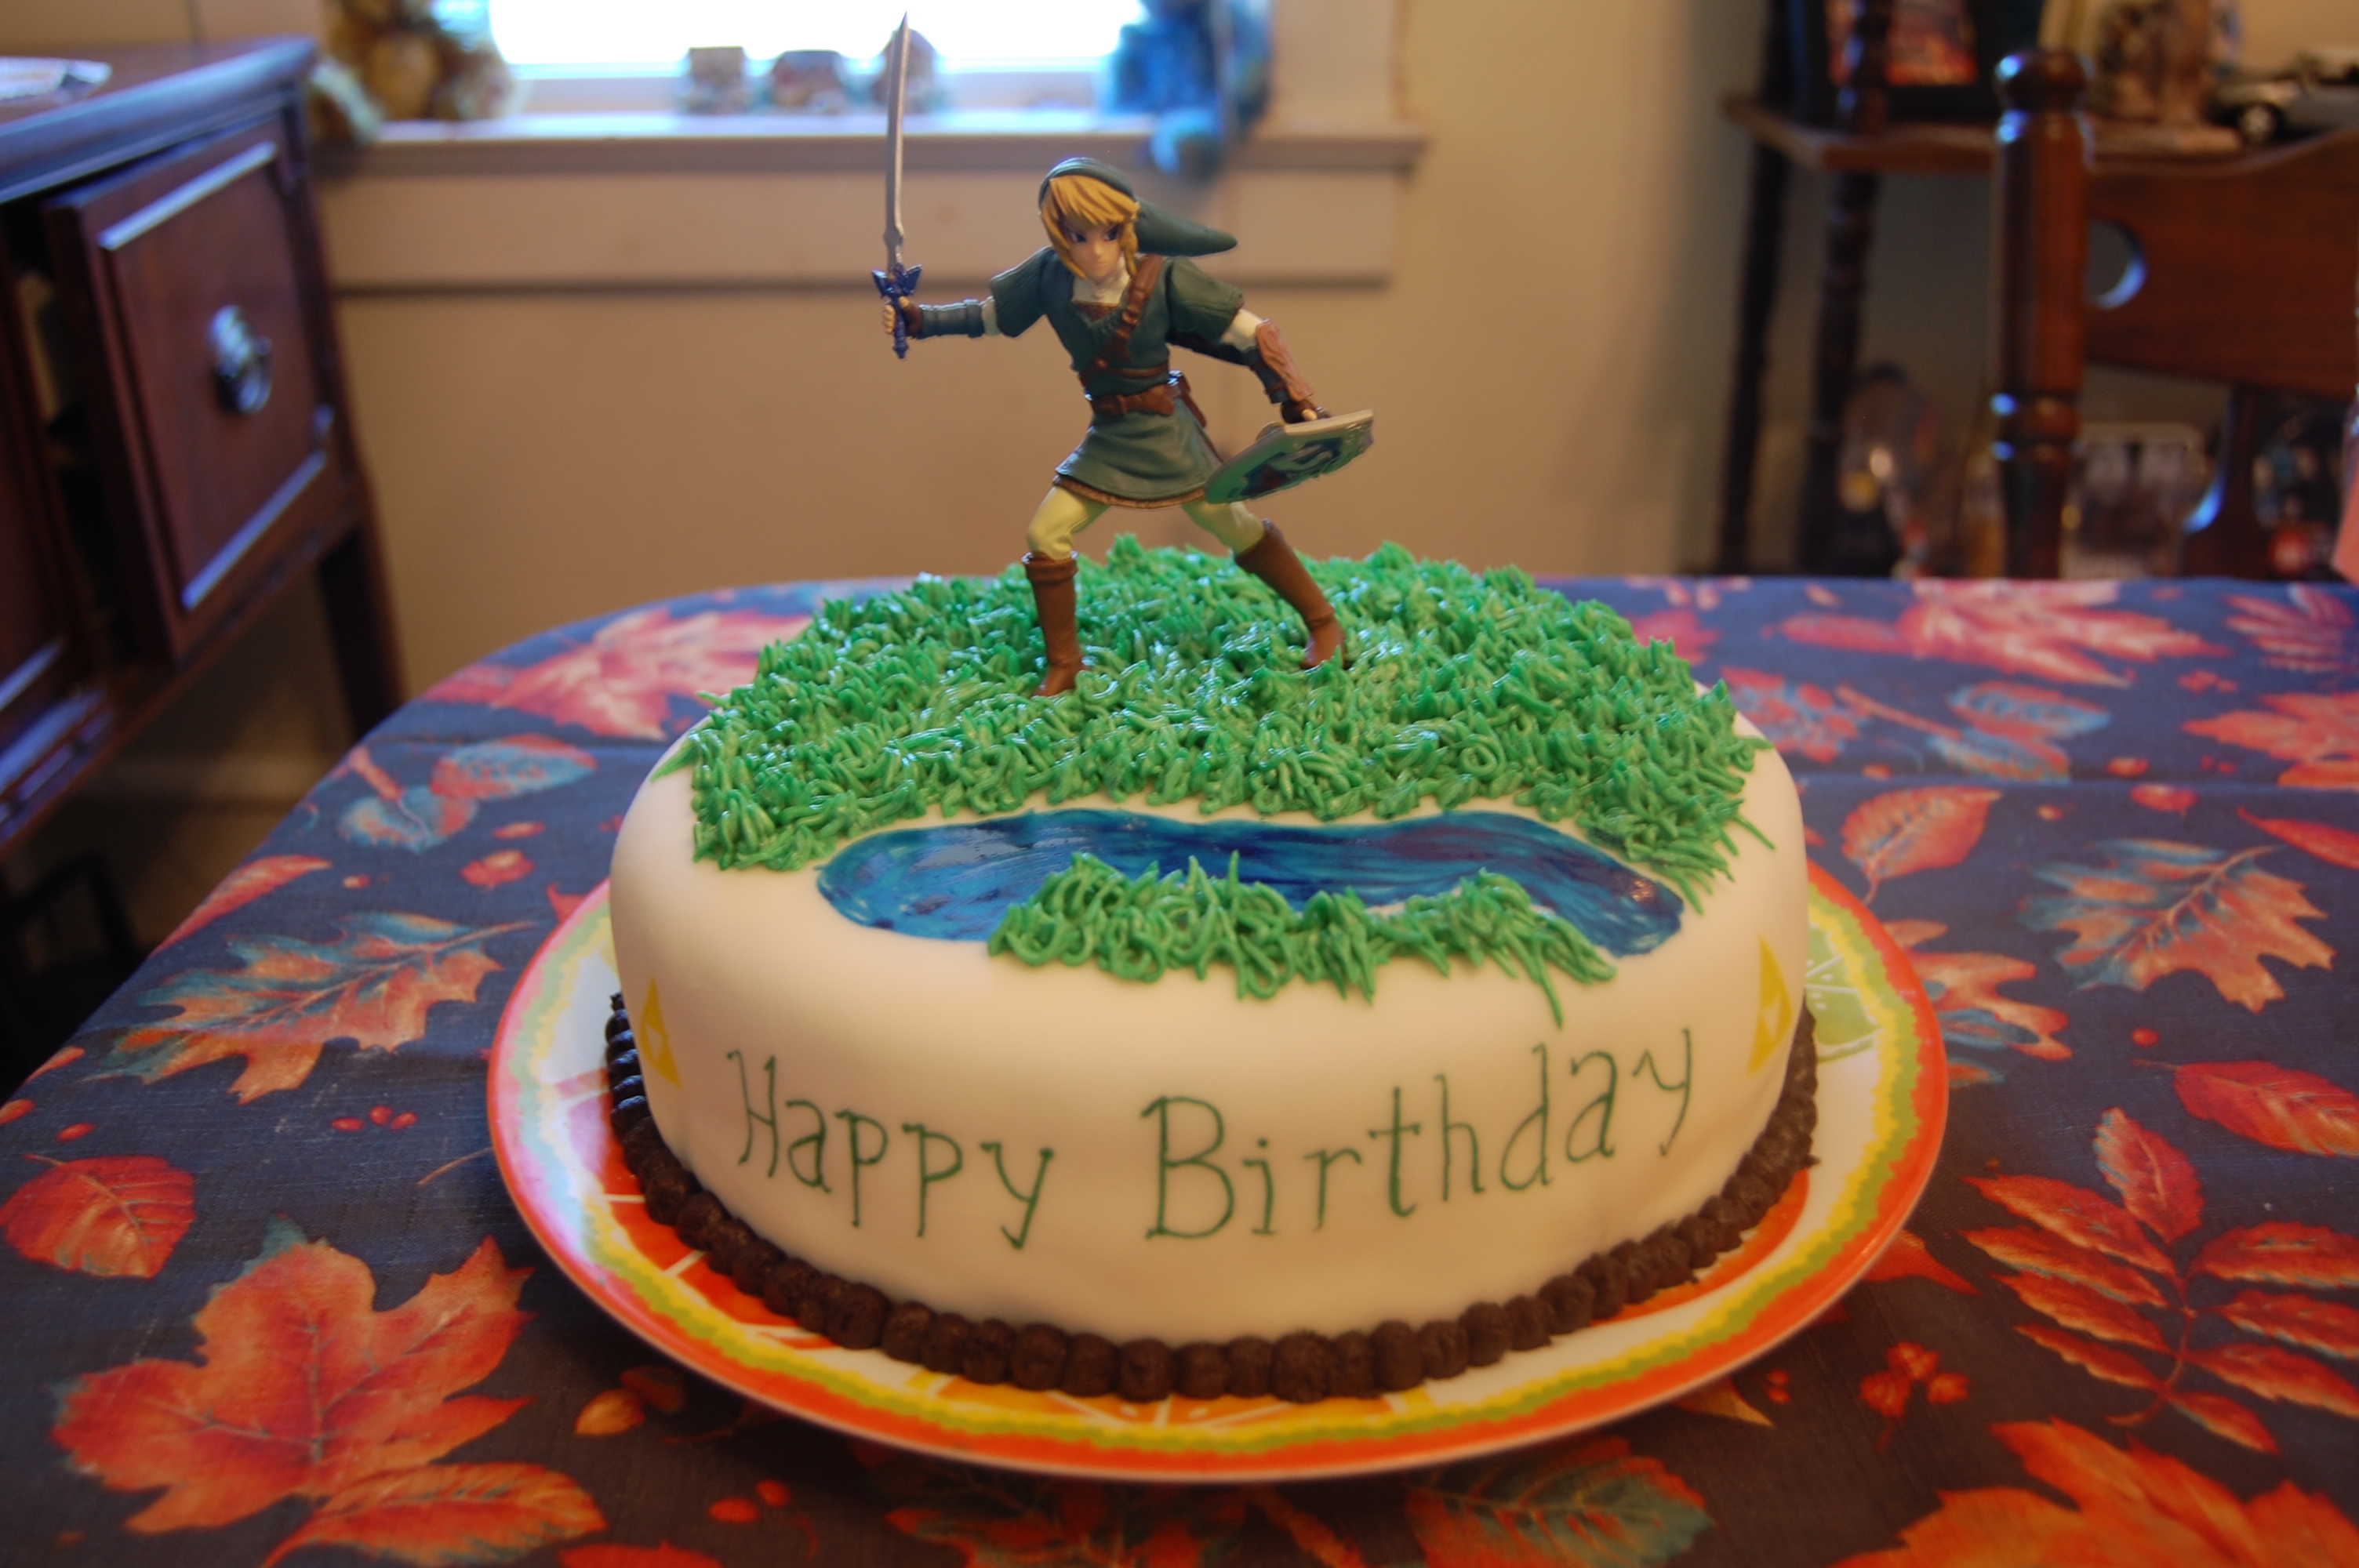 Legend_of_Zelda___Link_Cake_by_simon_sez.jpg